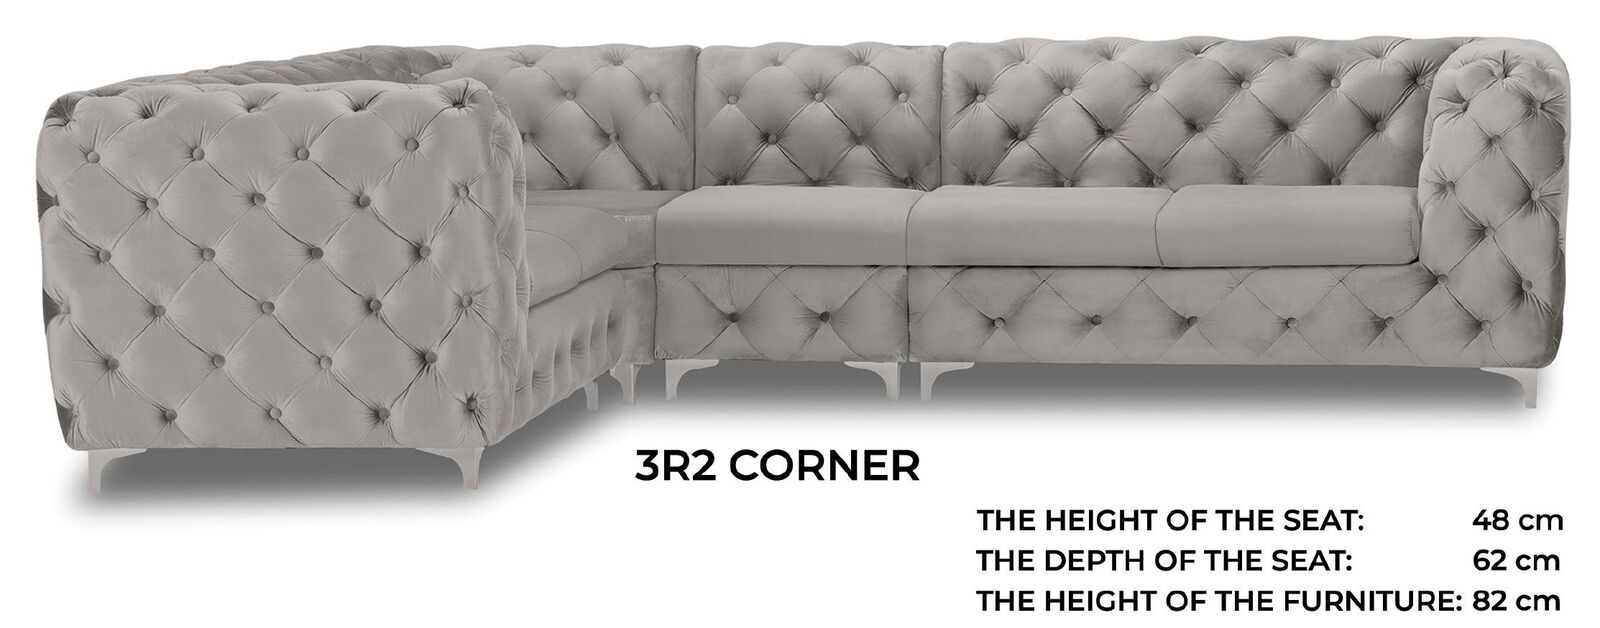 Luxury chesterfield sofa corner sofa sofa upholstery furniture corner set couches